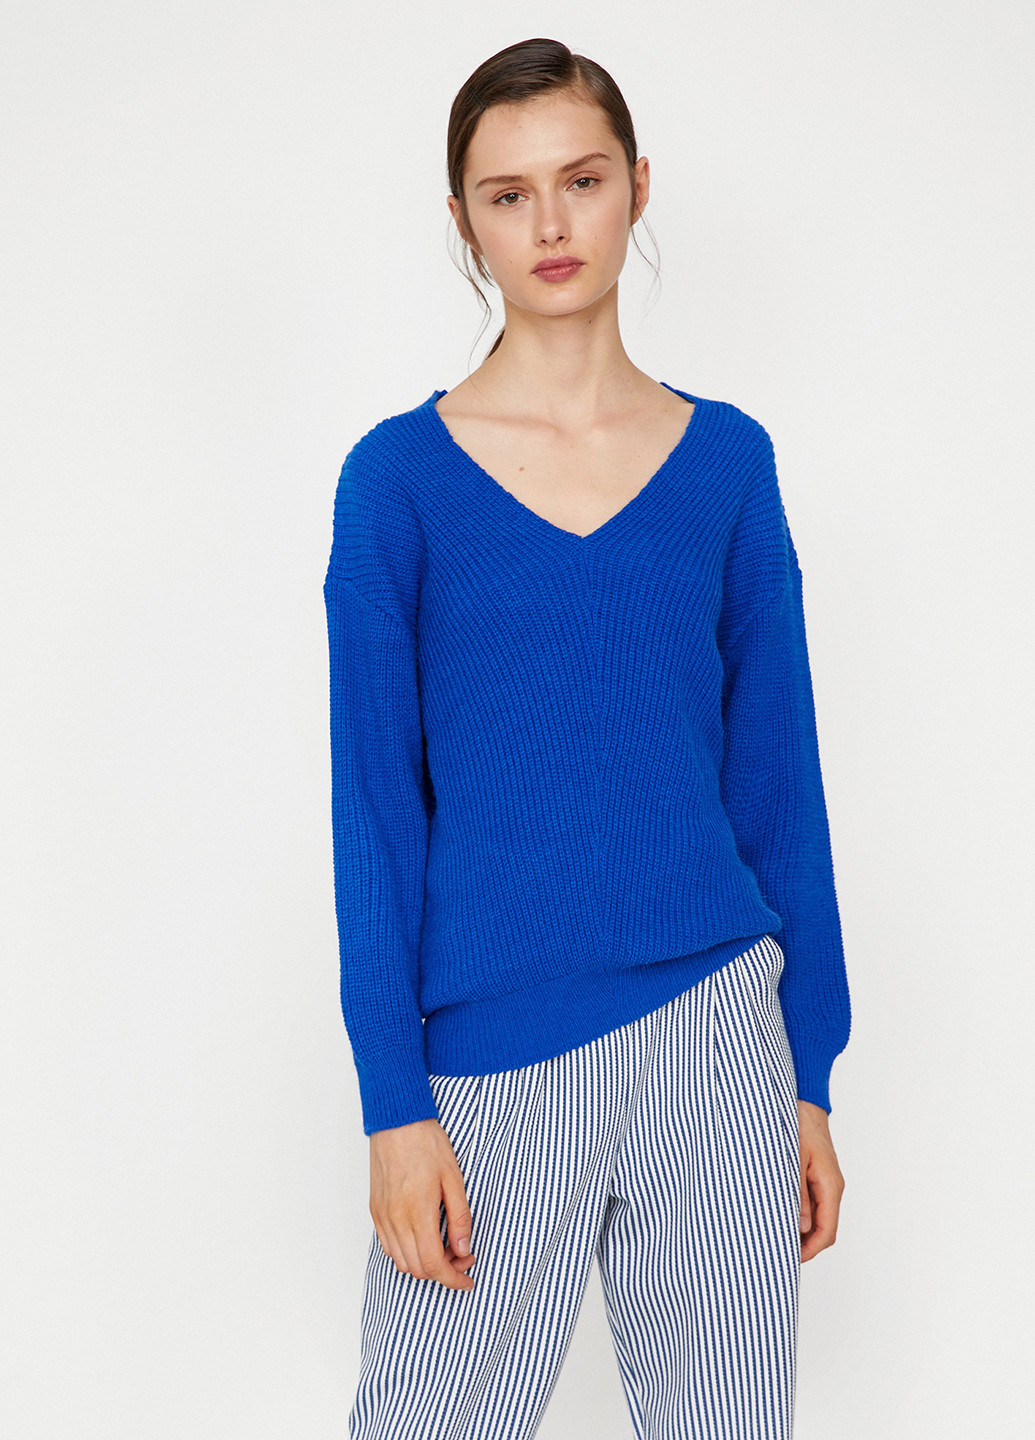 Синий демисезонный пуловер пуловер KOTON